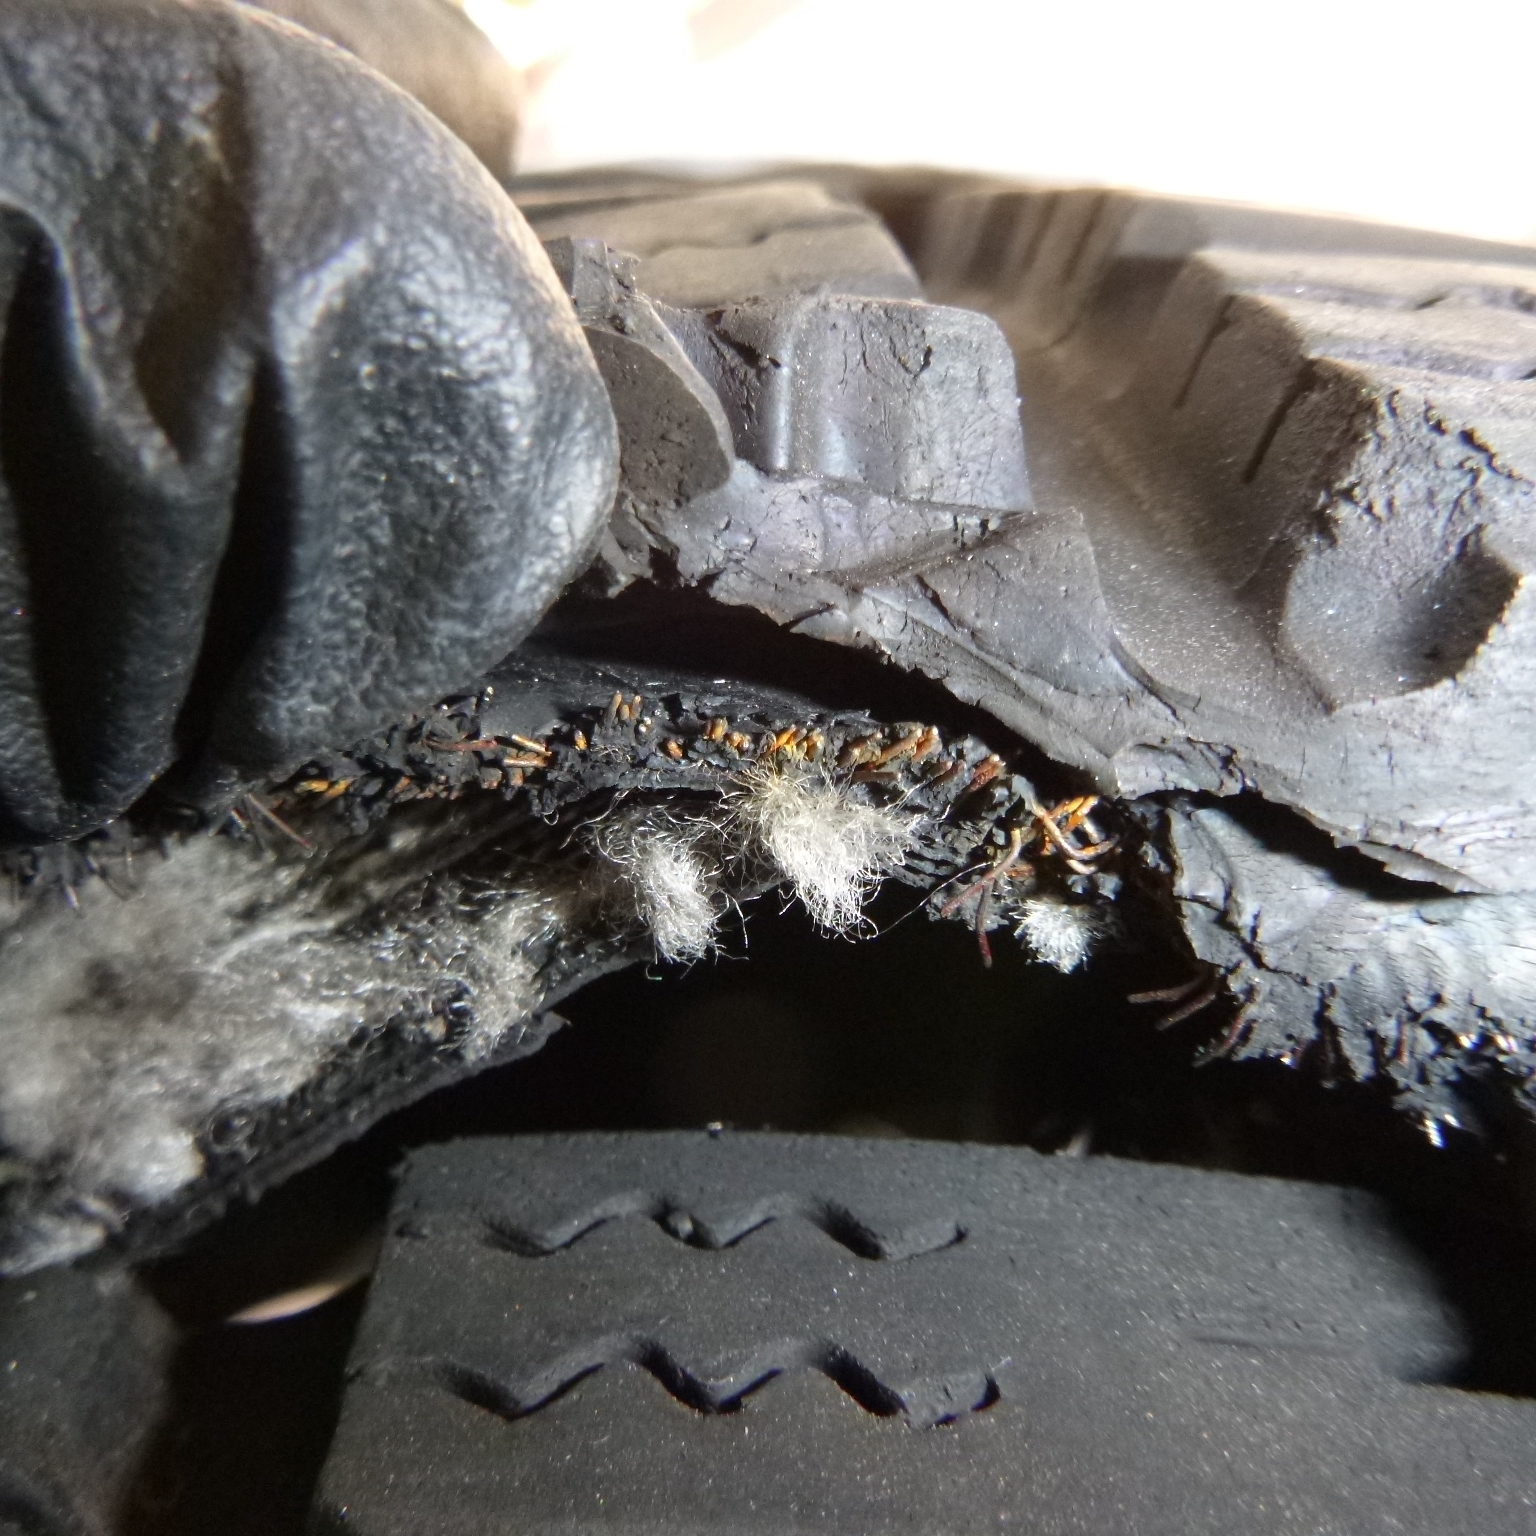 Inspecting failed automobile tire